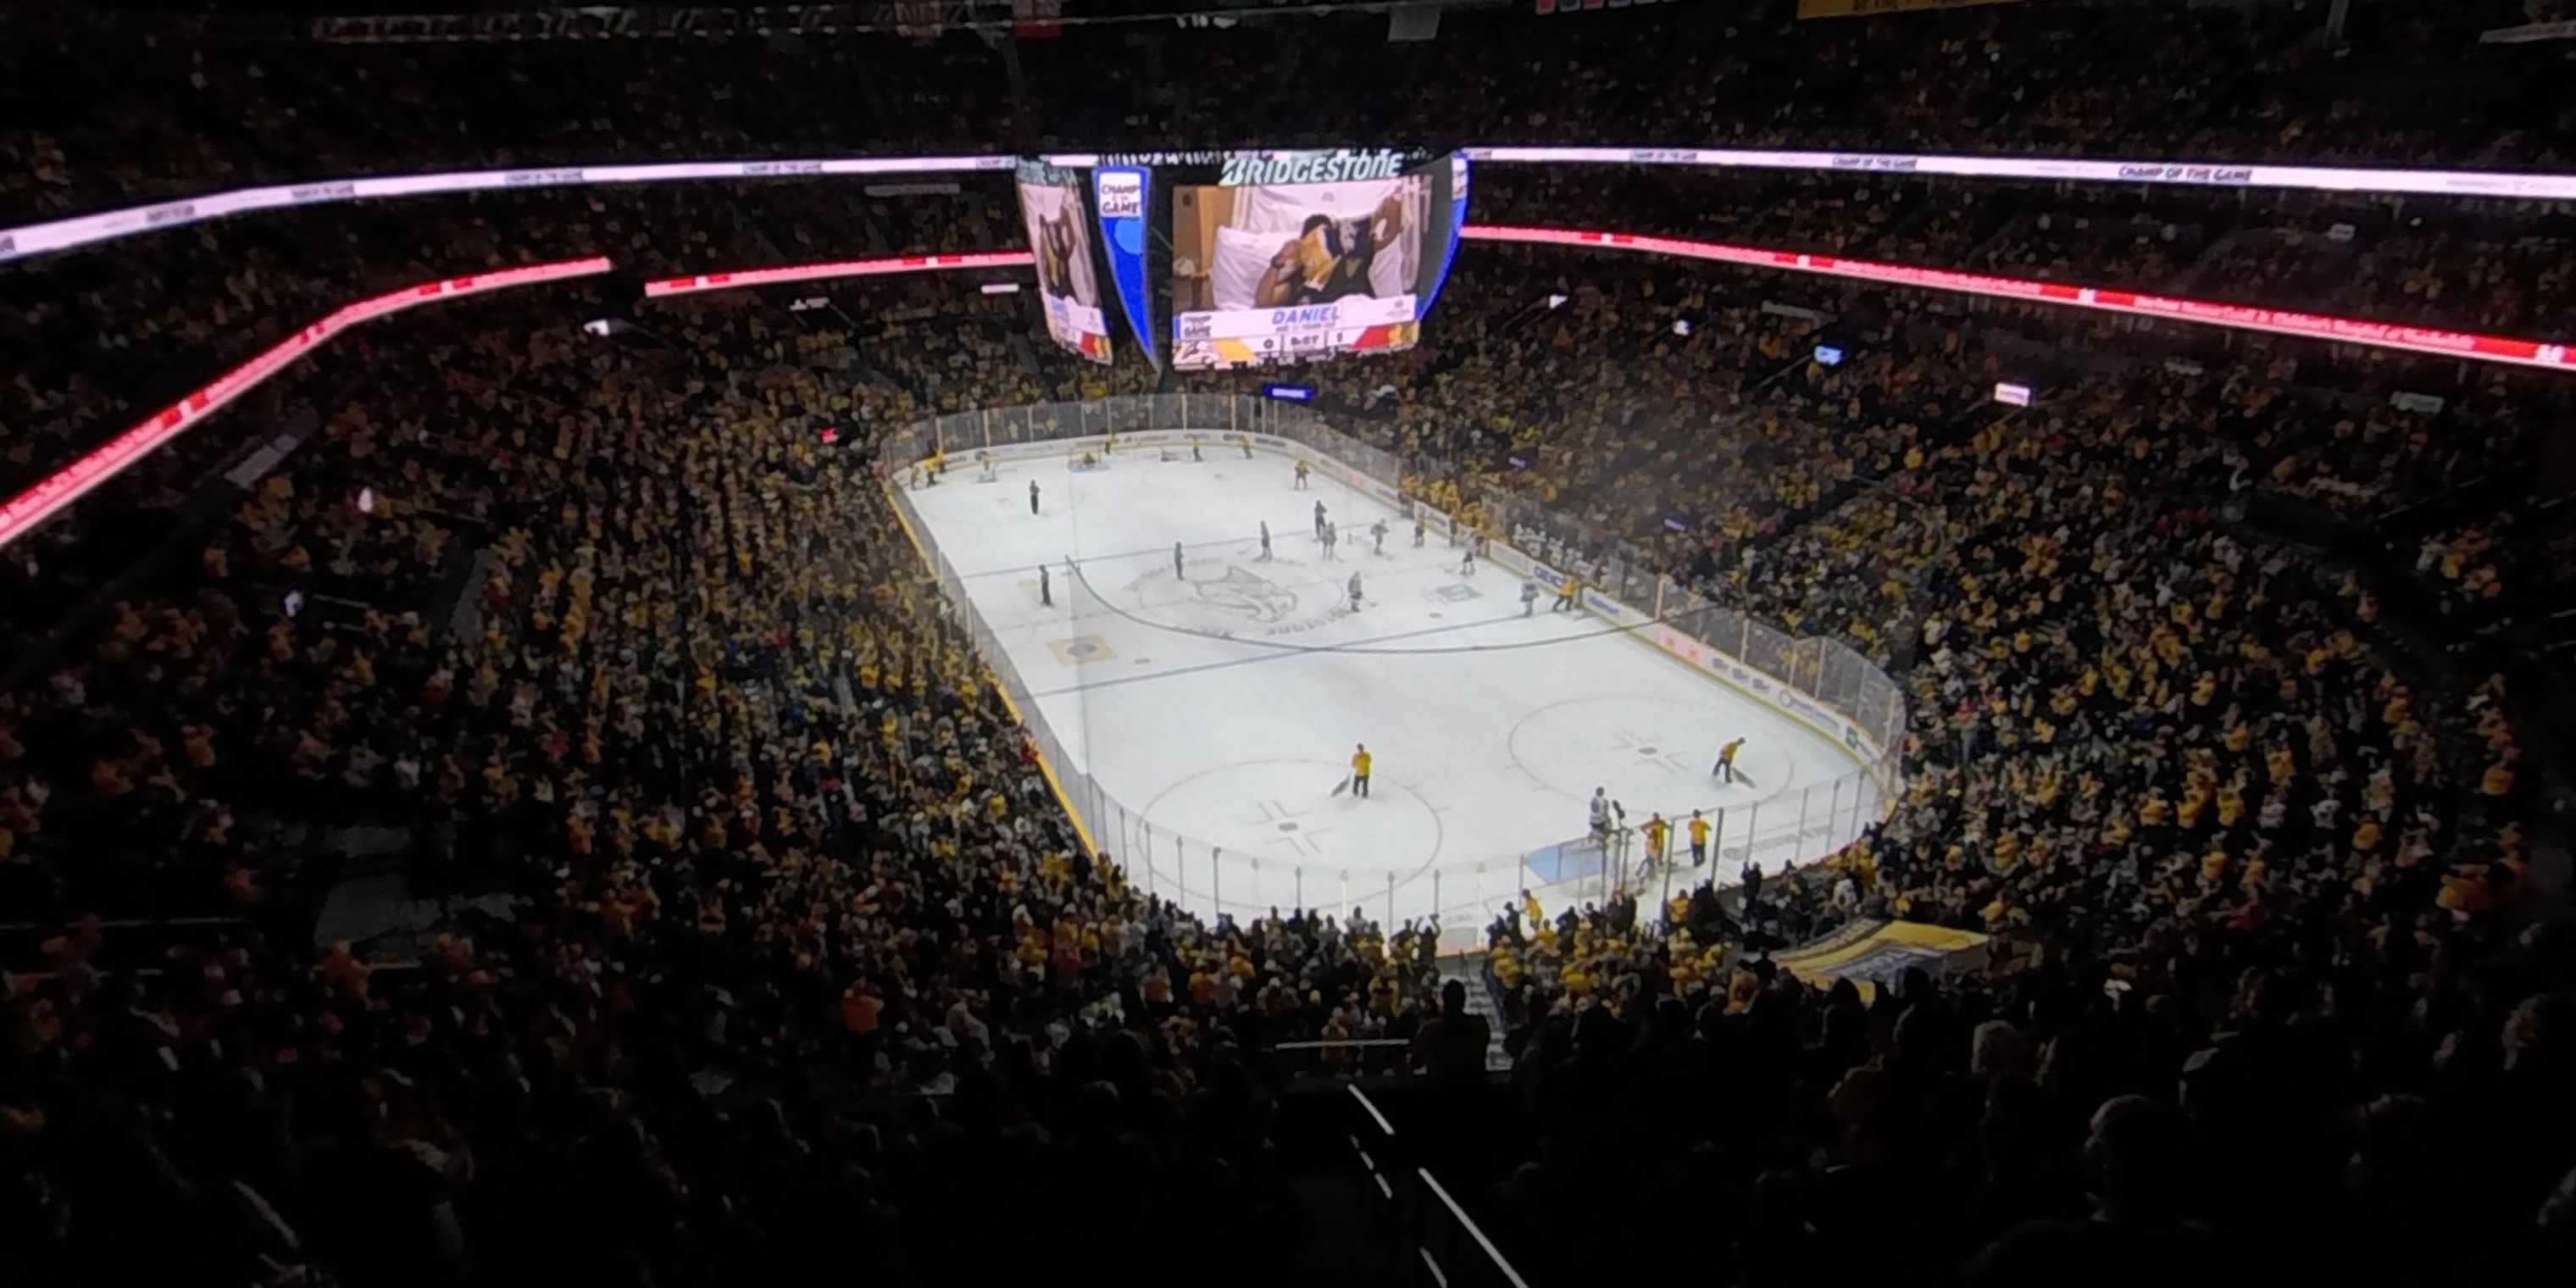 section 315 panoramic seat view  for hockey - bridgestone arena